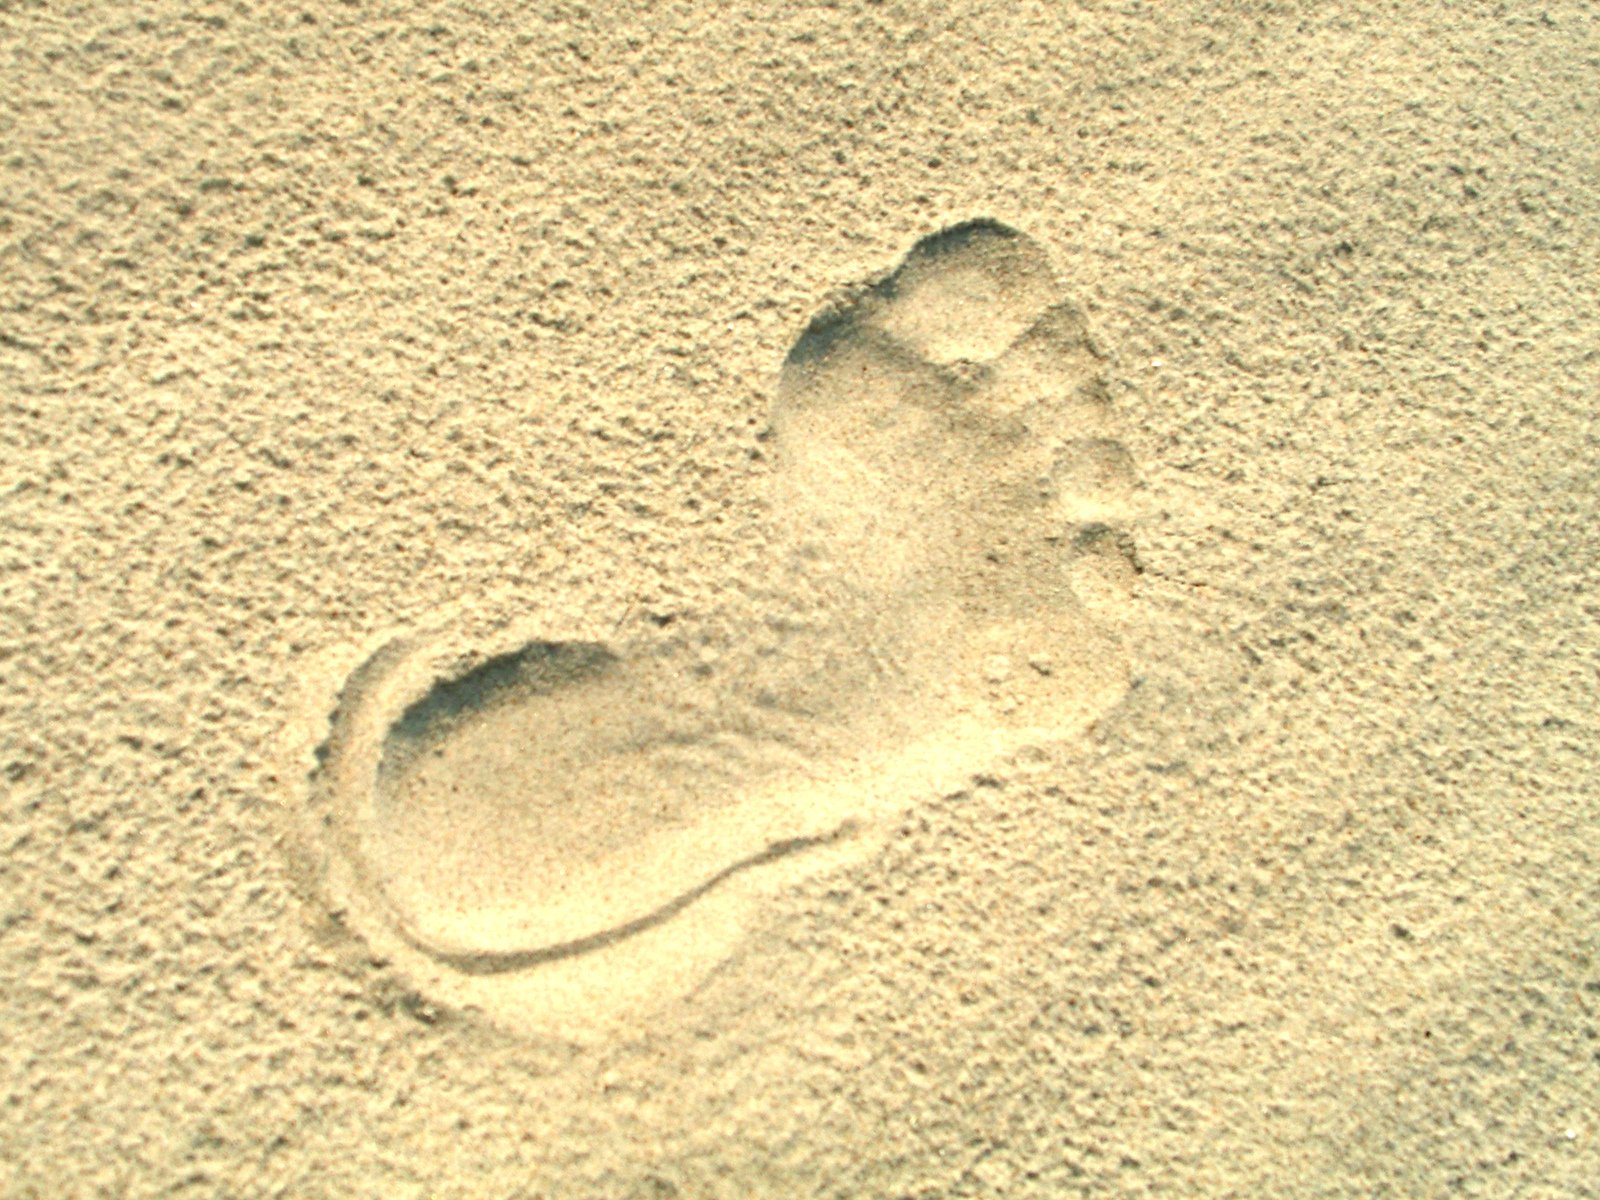 A foot mark